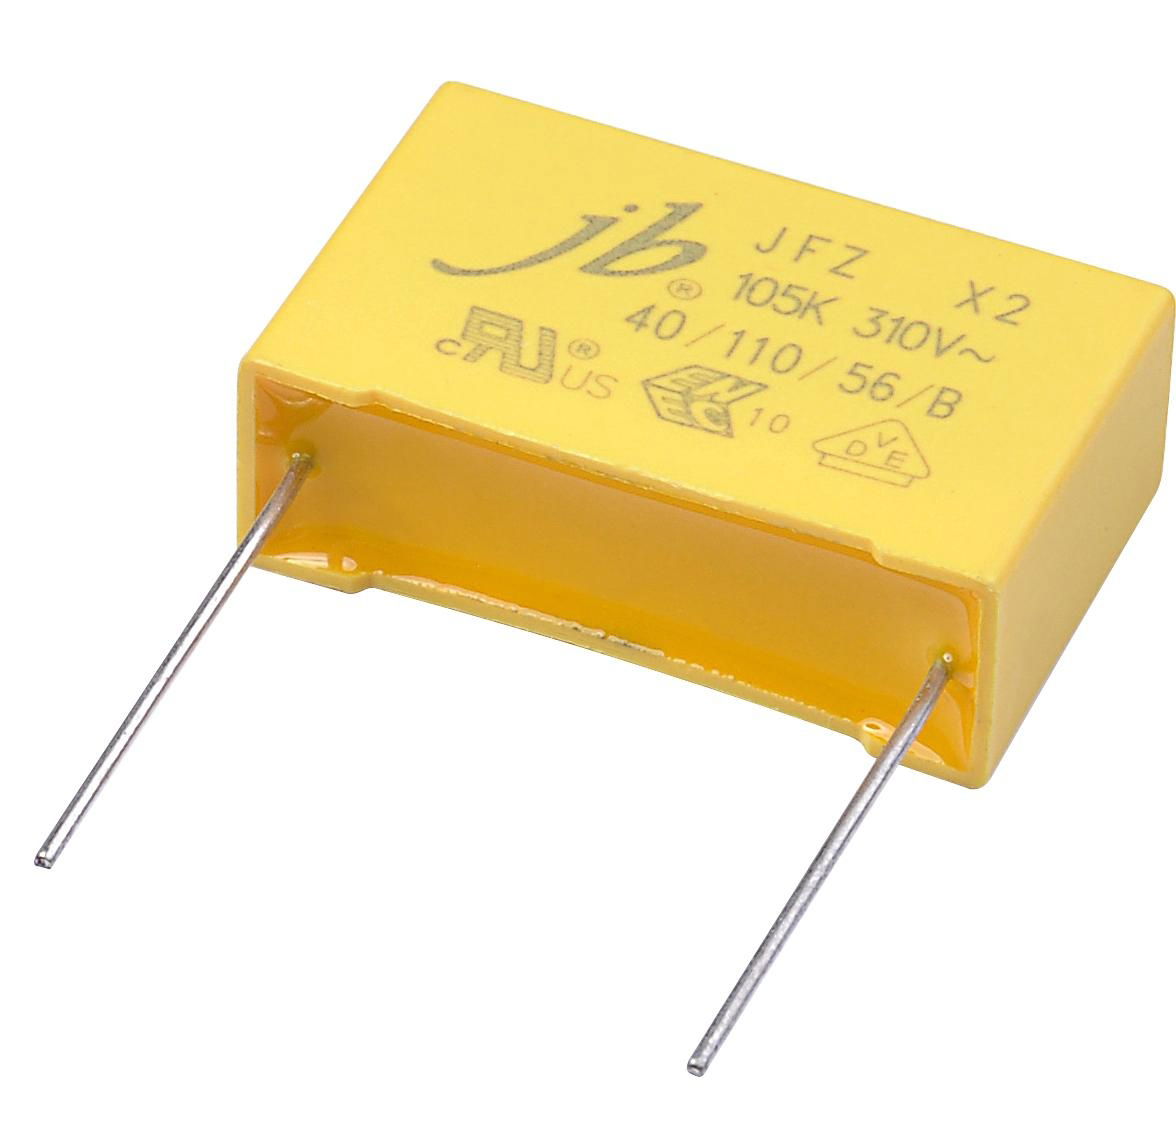 X2 metallized polypropylene film capacitors 4